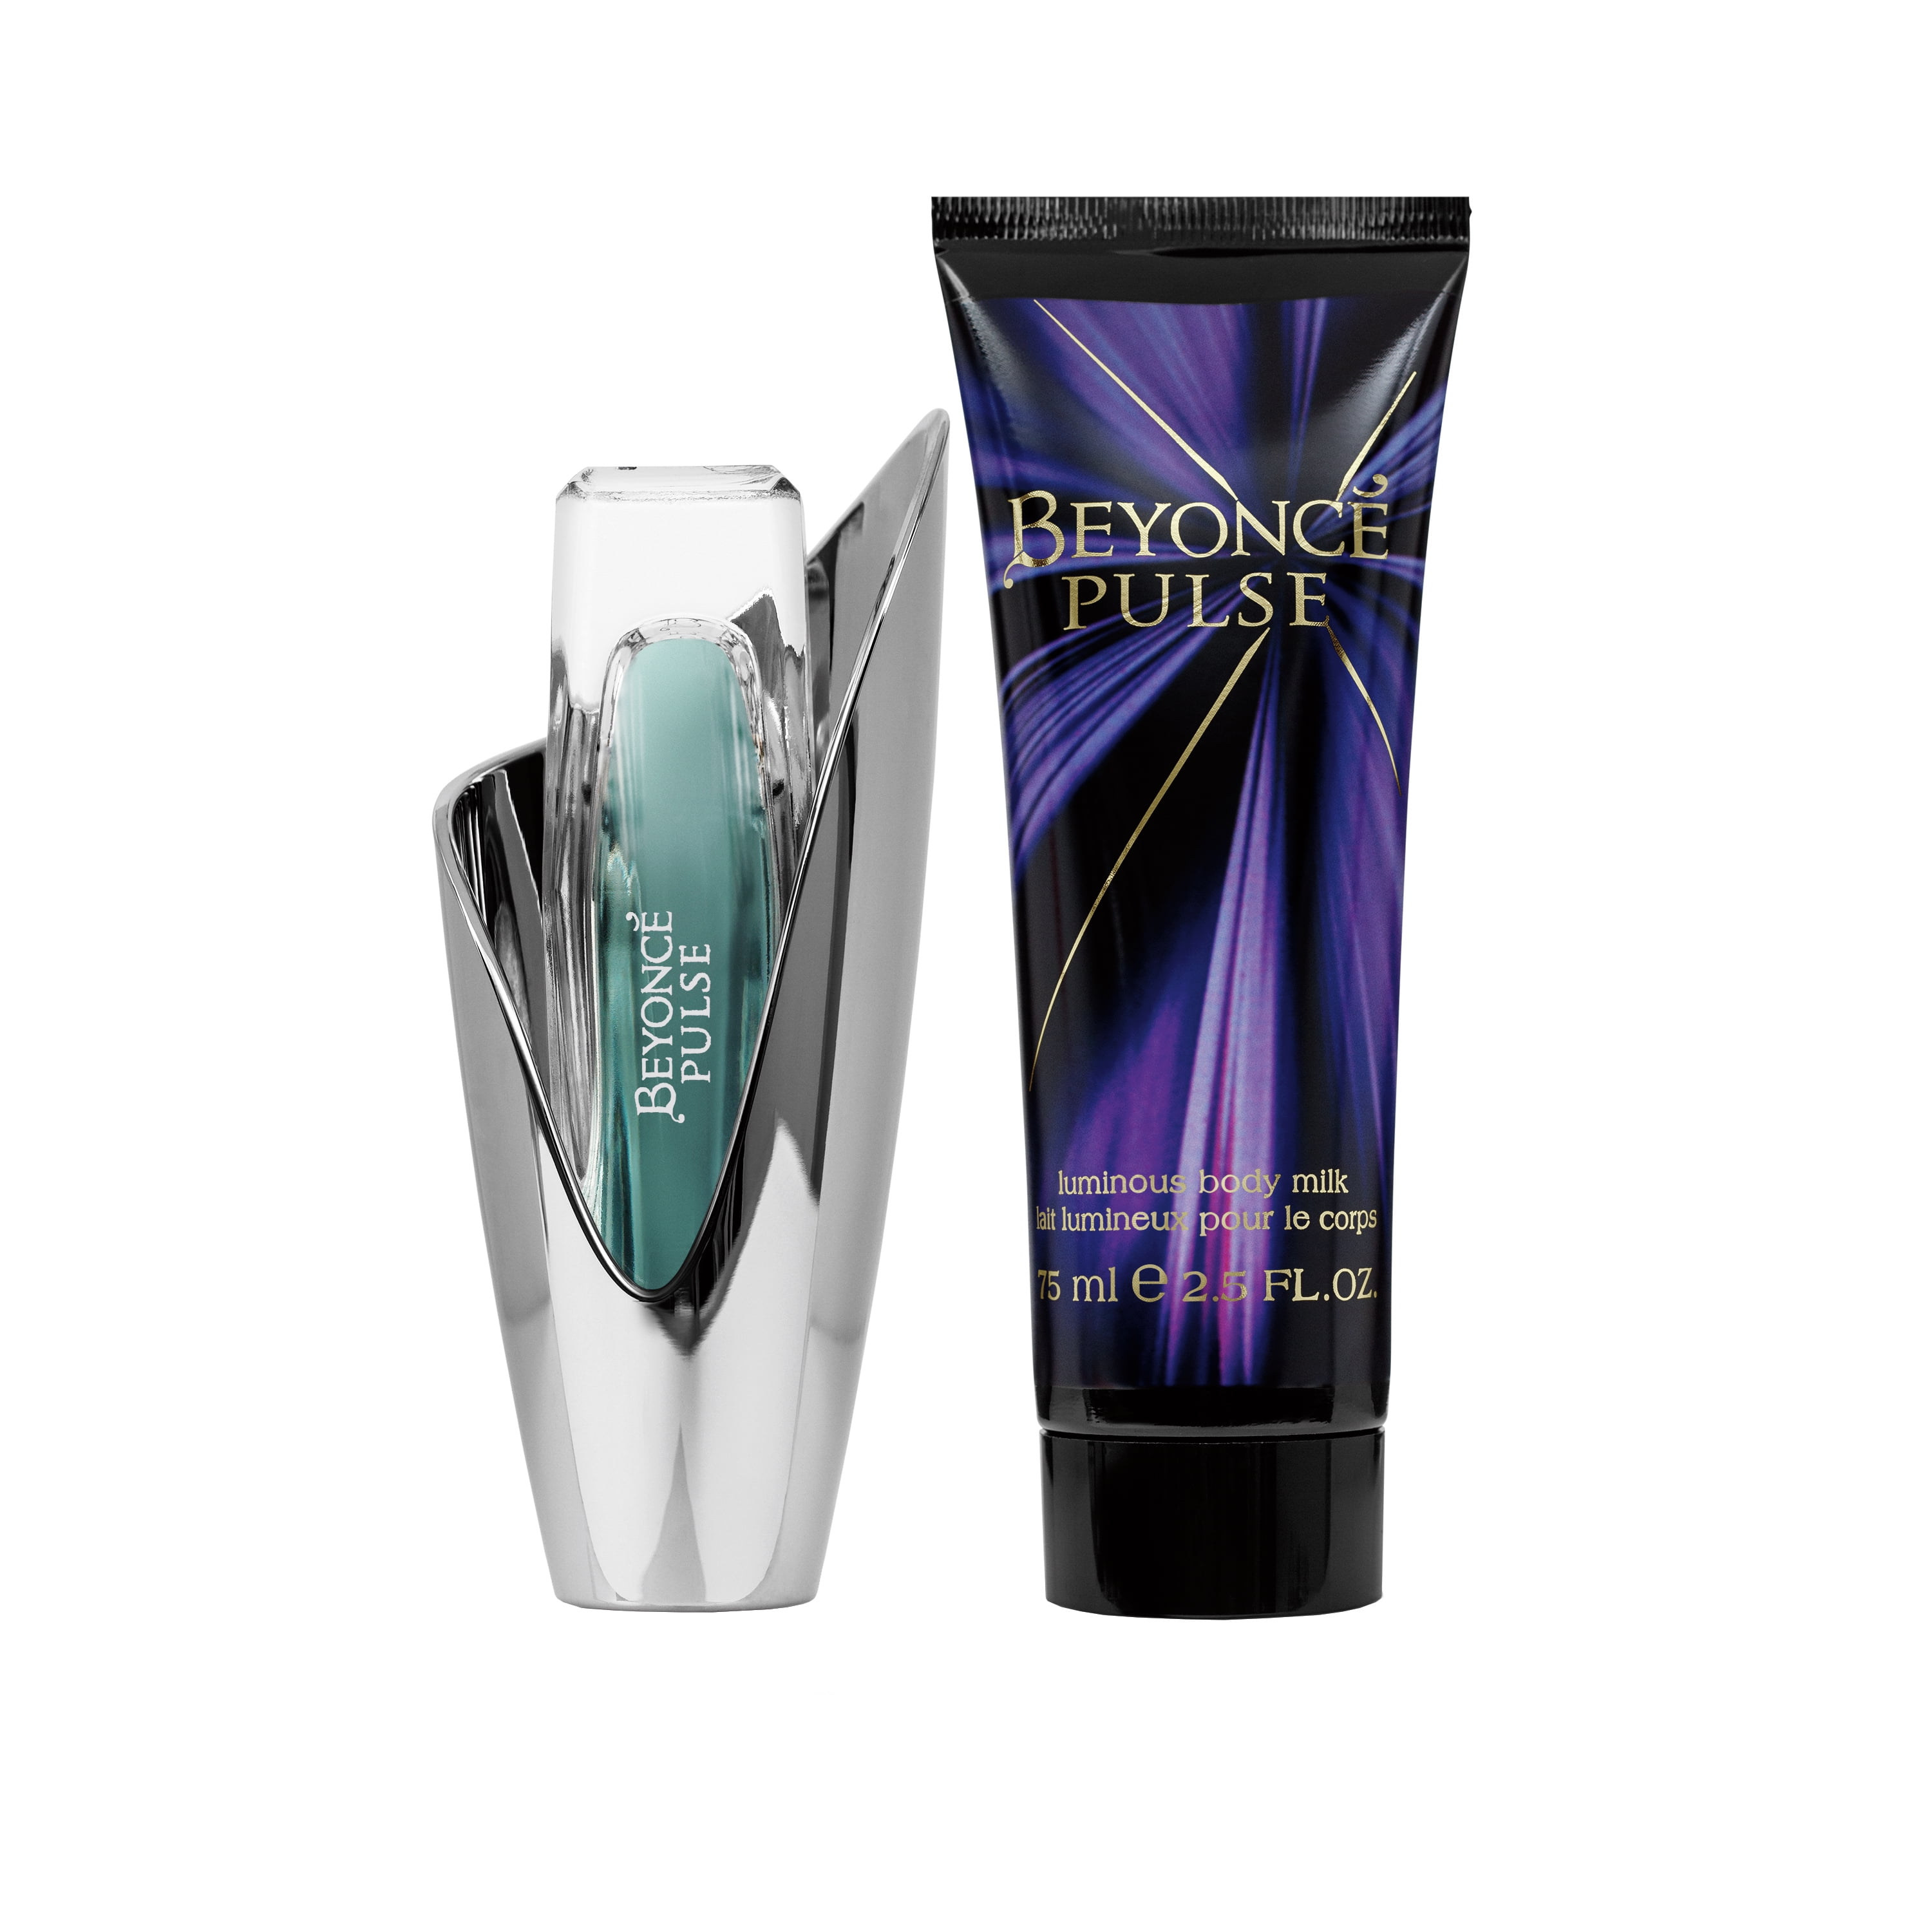 Beyonce Pulse Body Lotion & Eau de Fragrance, Holiday Gift Set for Women, 2 pc - Walmart.com